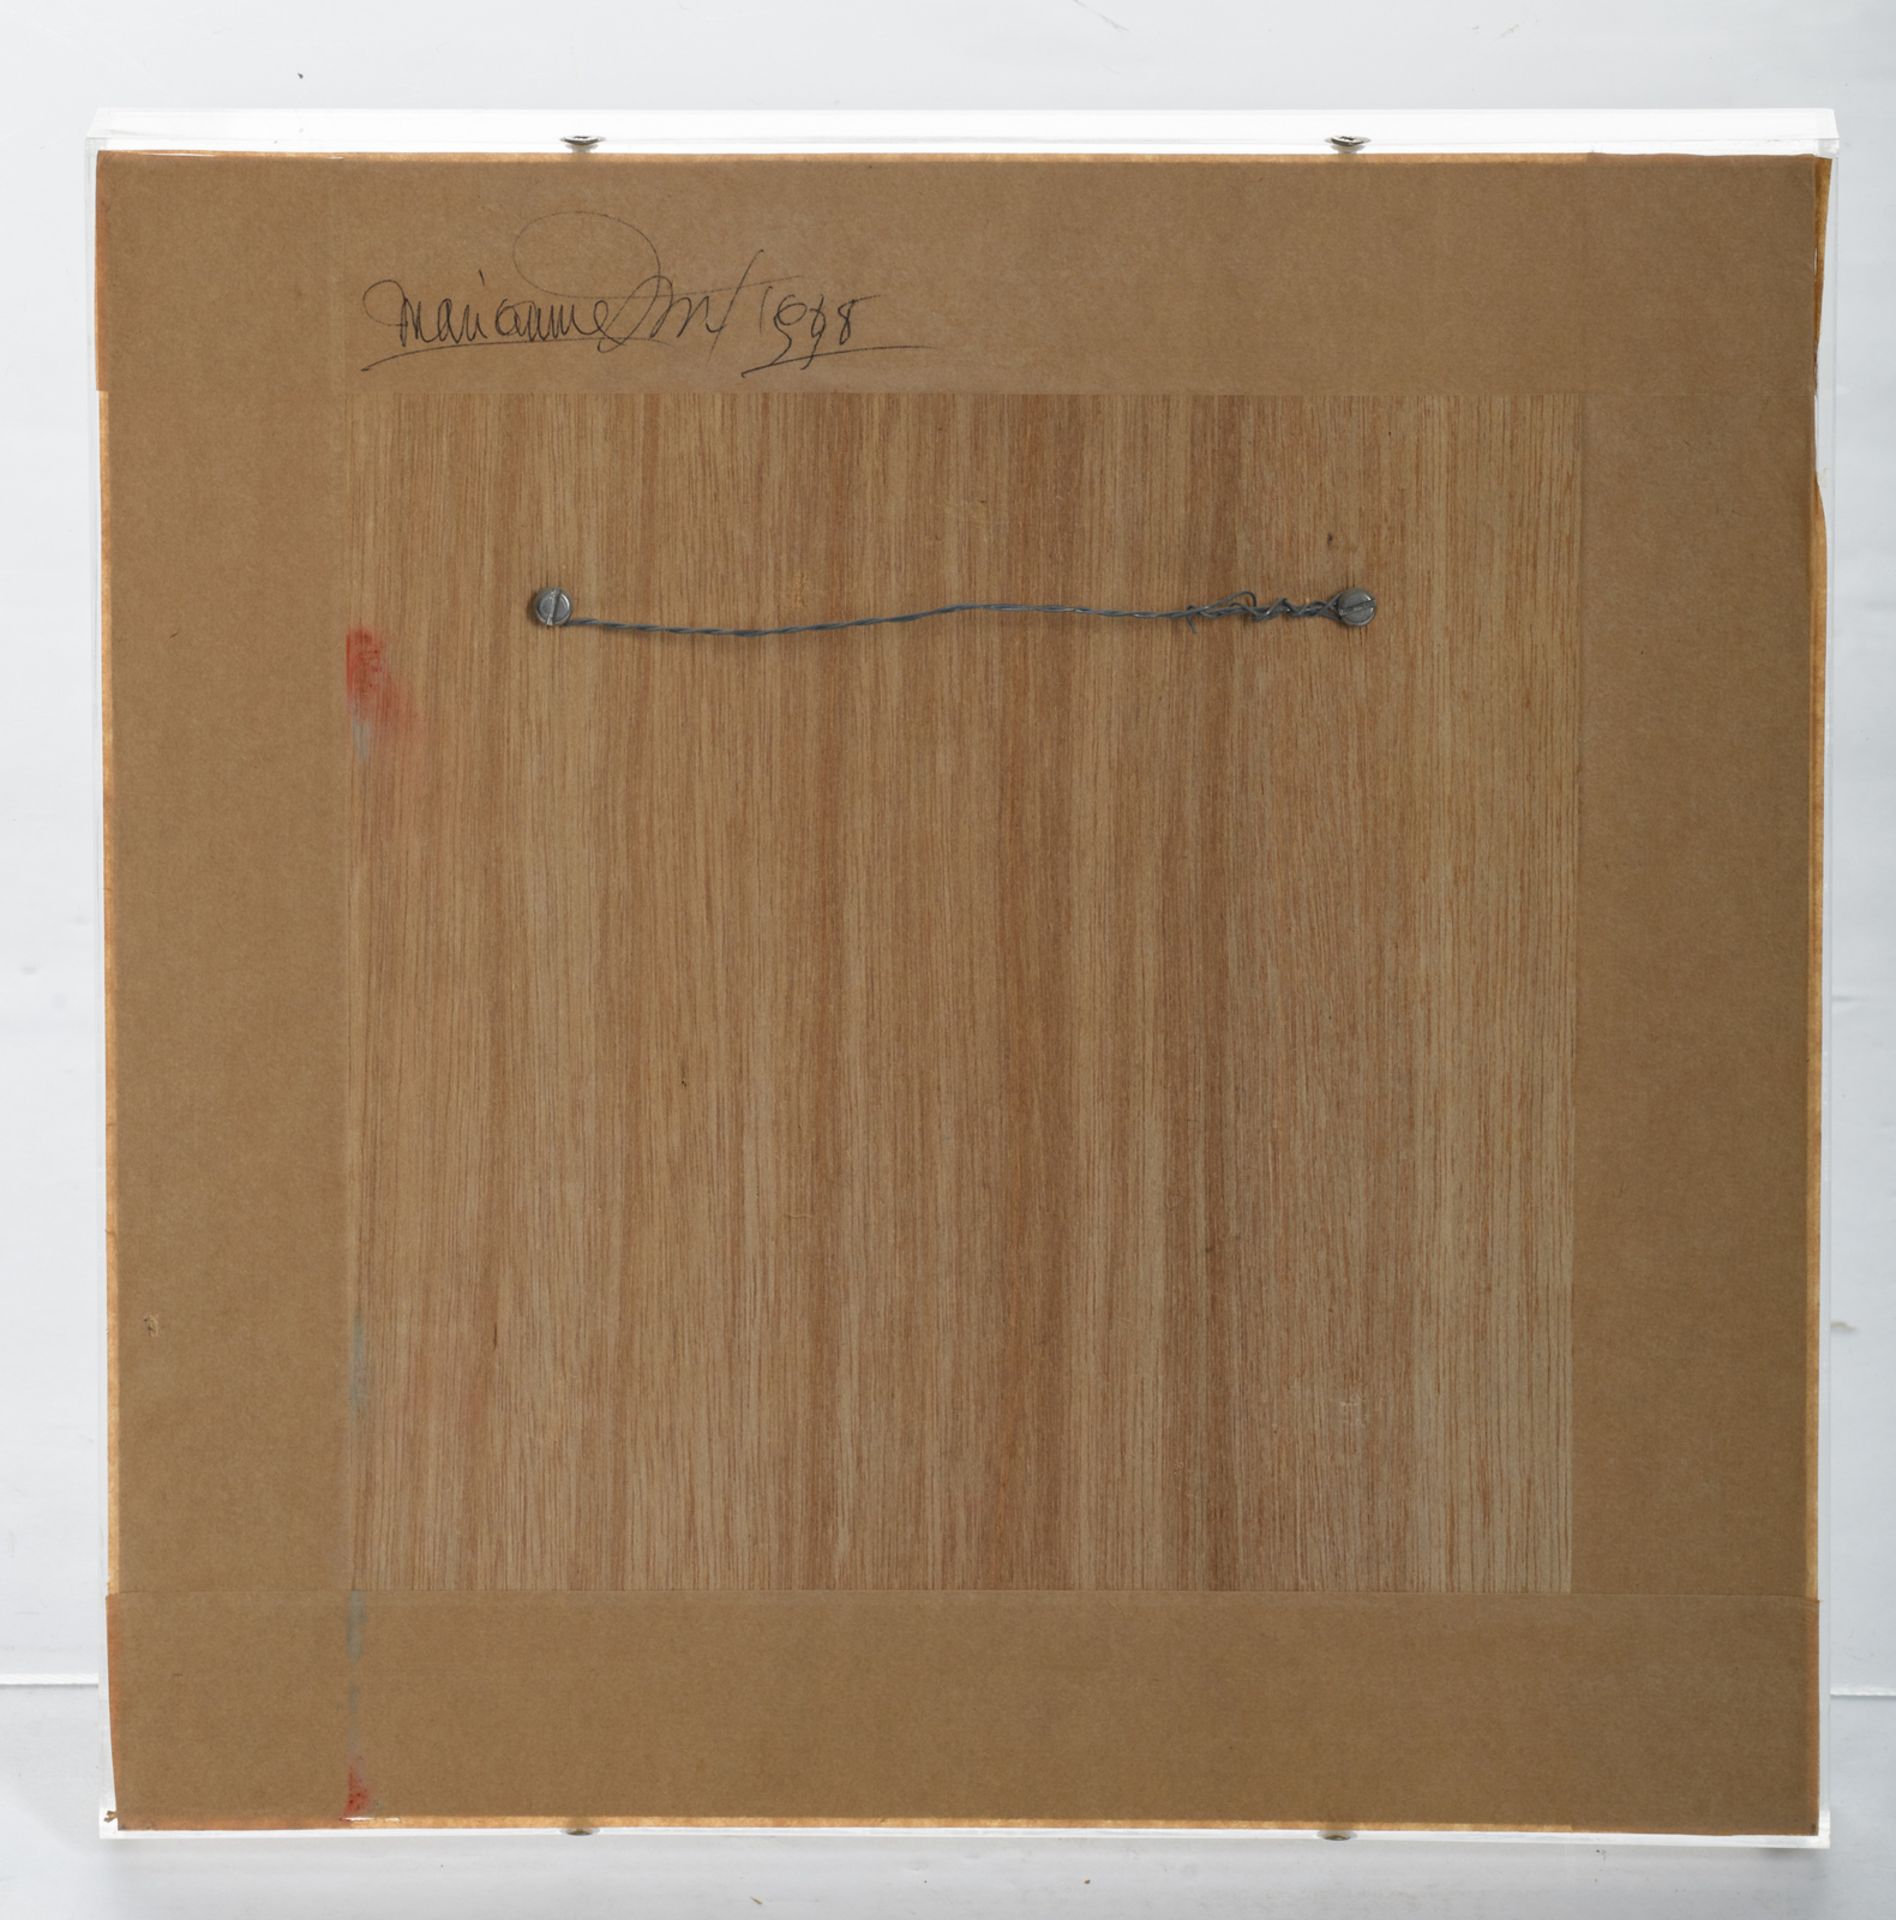 Michiels D., 'Marianne', oil on foamboard, dated 1998, in a plexi box, 36 x 36 cm - Image 3 of 5